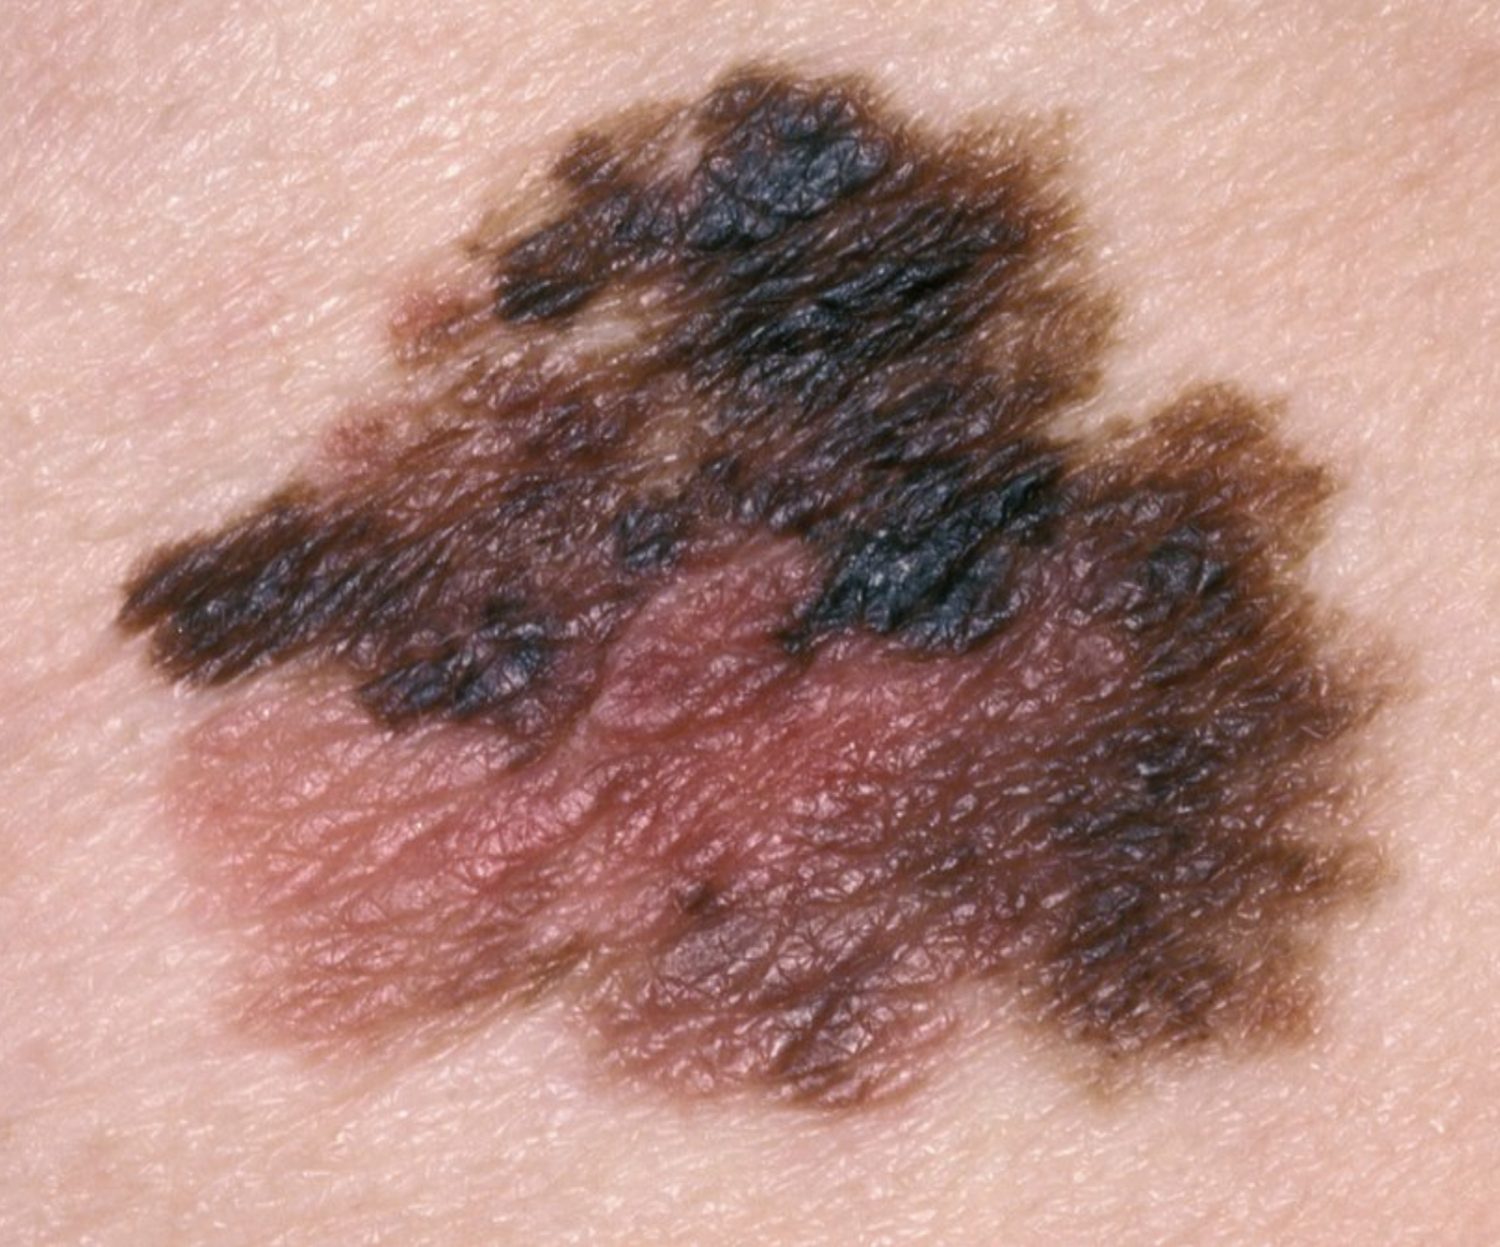 Nodular Melanoma Skin Cancer